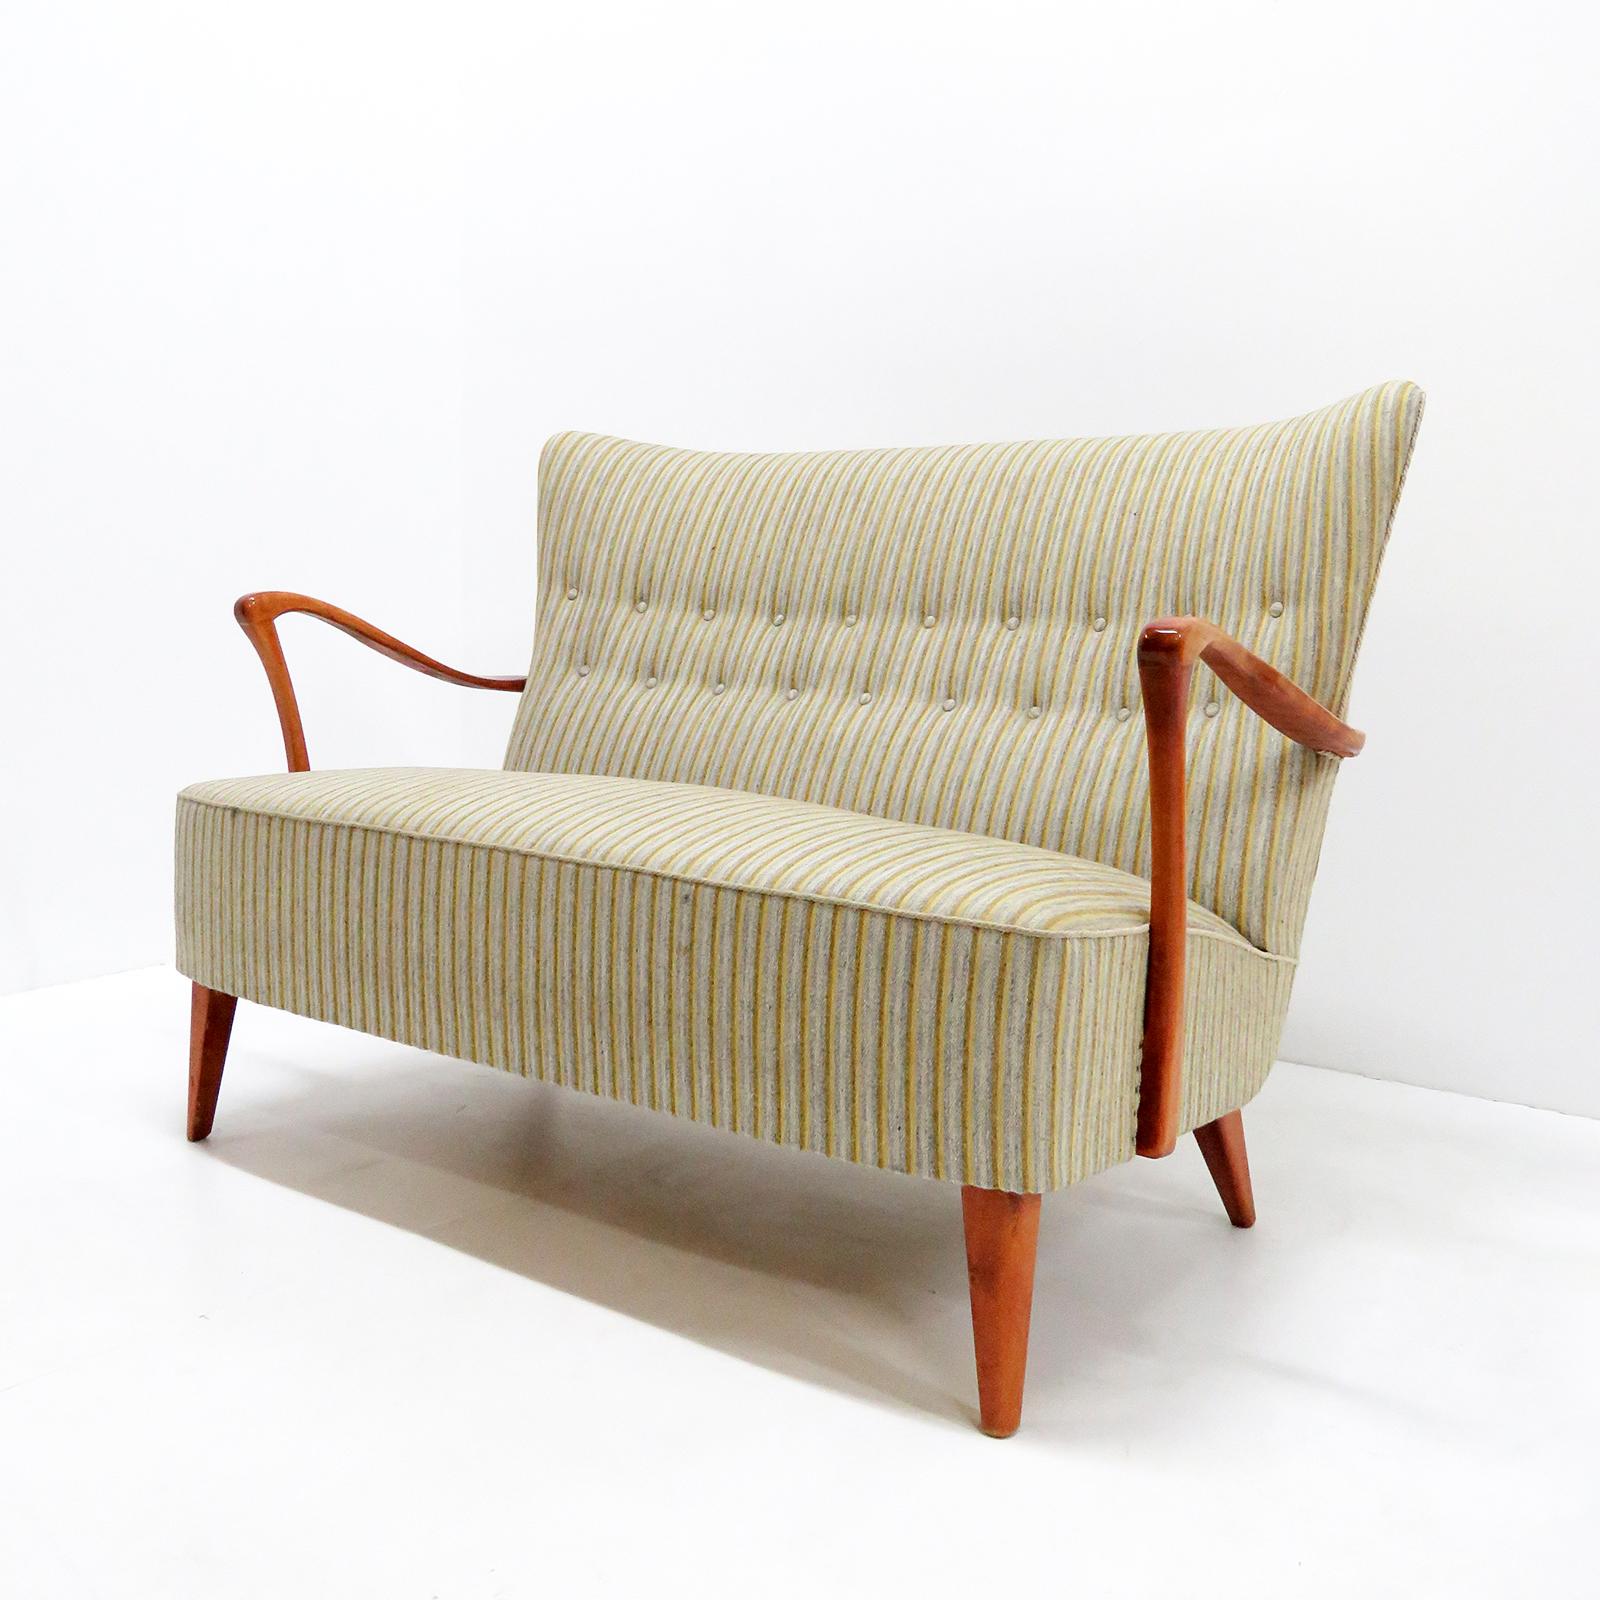 Scandinavian Modern Danish Modern Sofa by DUX, 1940